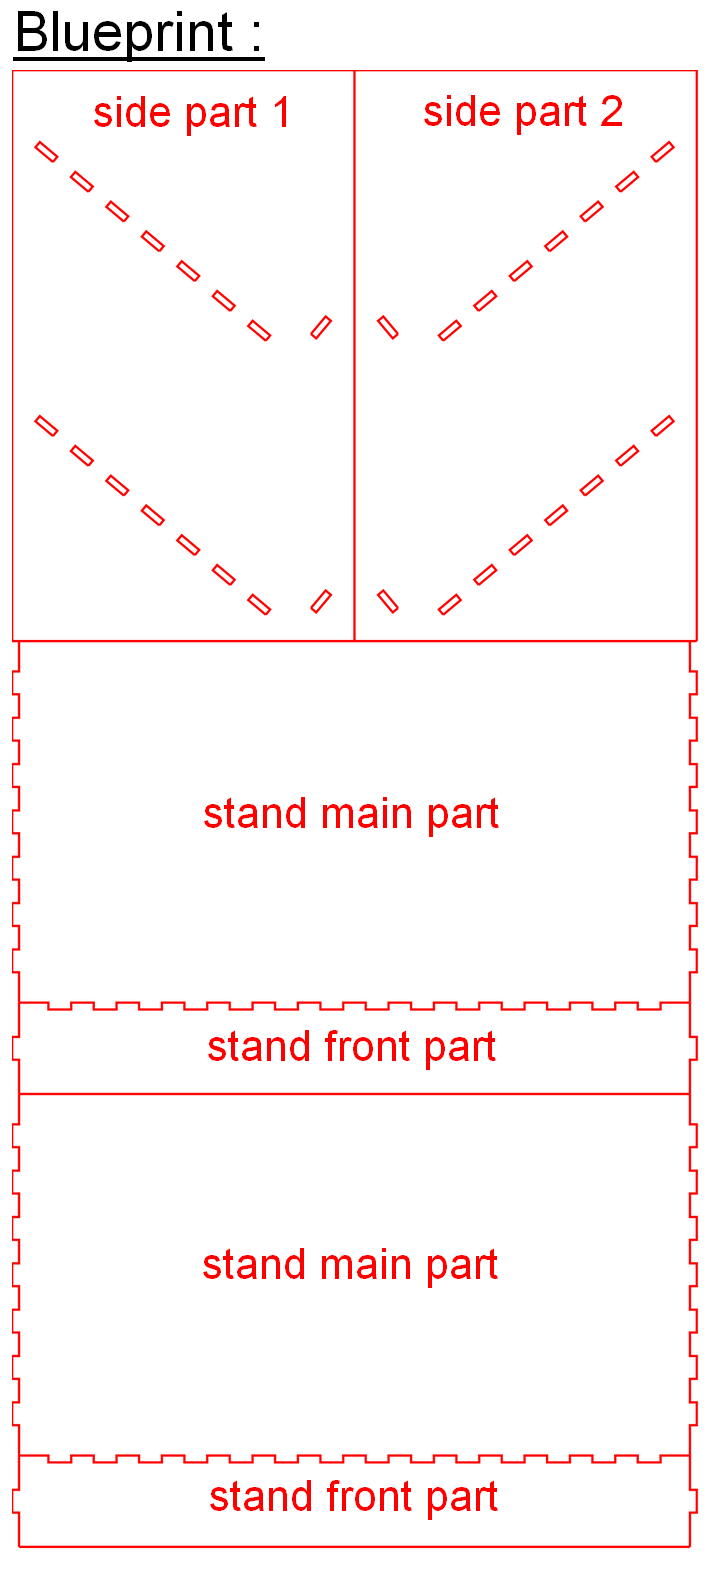 blueprint_paper_stand